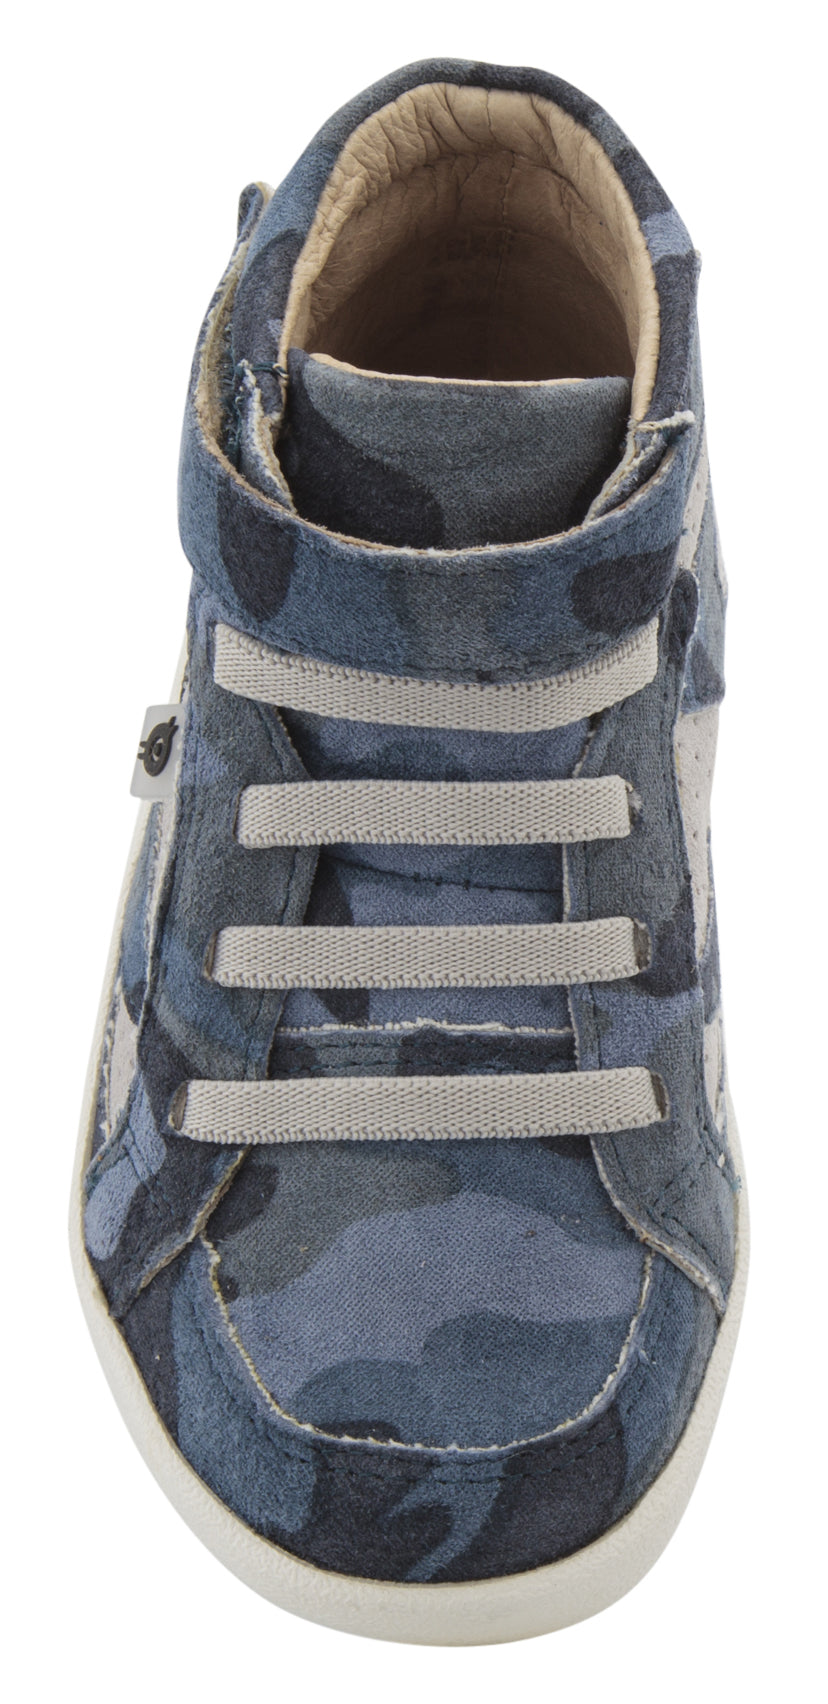 Old Soles Girl's & Boy's New Leader Sneakers - Marine Camo/Grey Suede